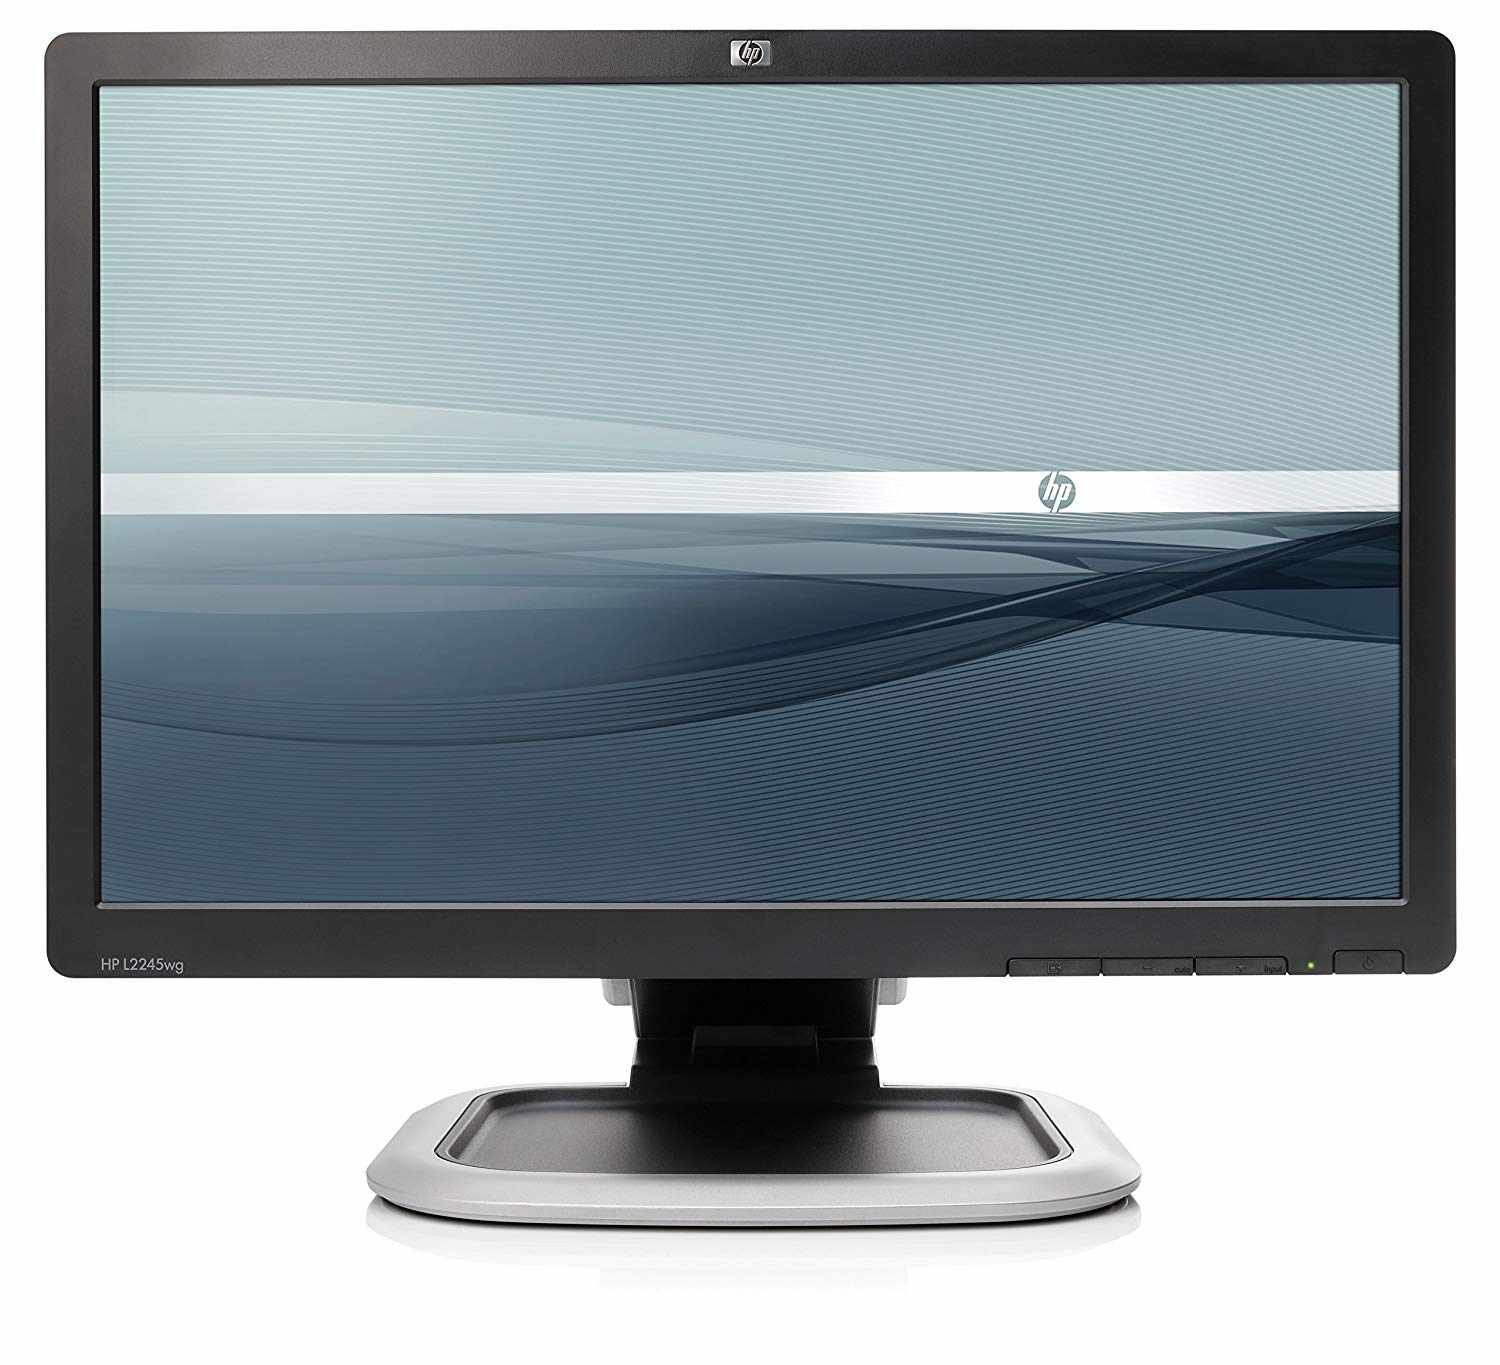 Monitor Refurbished HP L2245W, 22 Inch LCD, 1680 x 1050, VGA, DVI